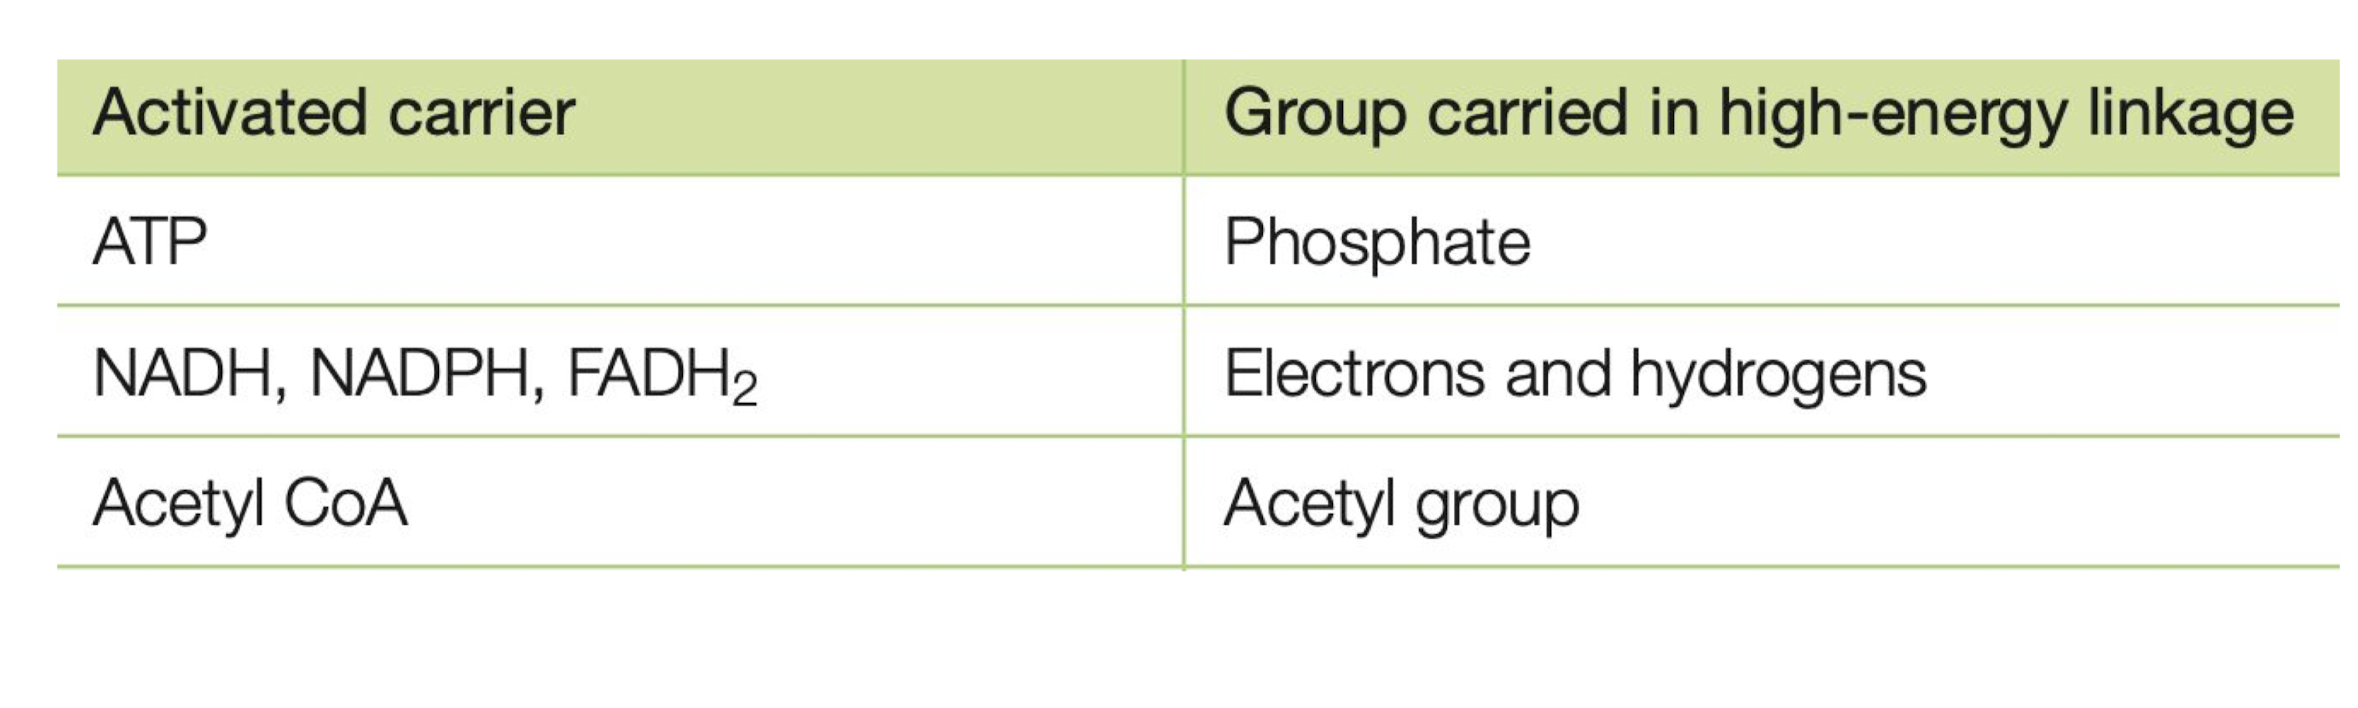 <ol><li><p>ATP</p></li><li><p>NADH</p></li><li><p>NADPH</p></li><li><p>Acetyl CoA</p></li><li><p>FADH2</p></li></ol>